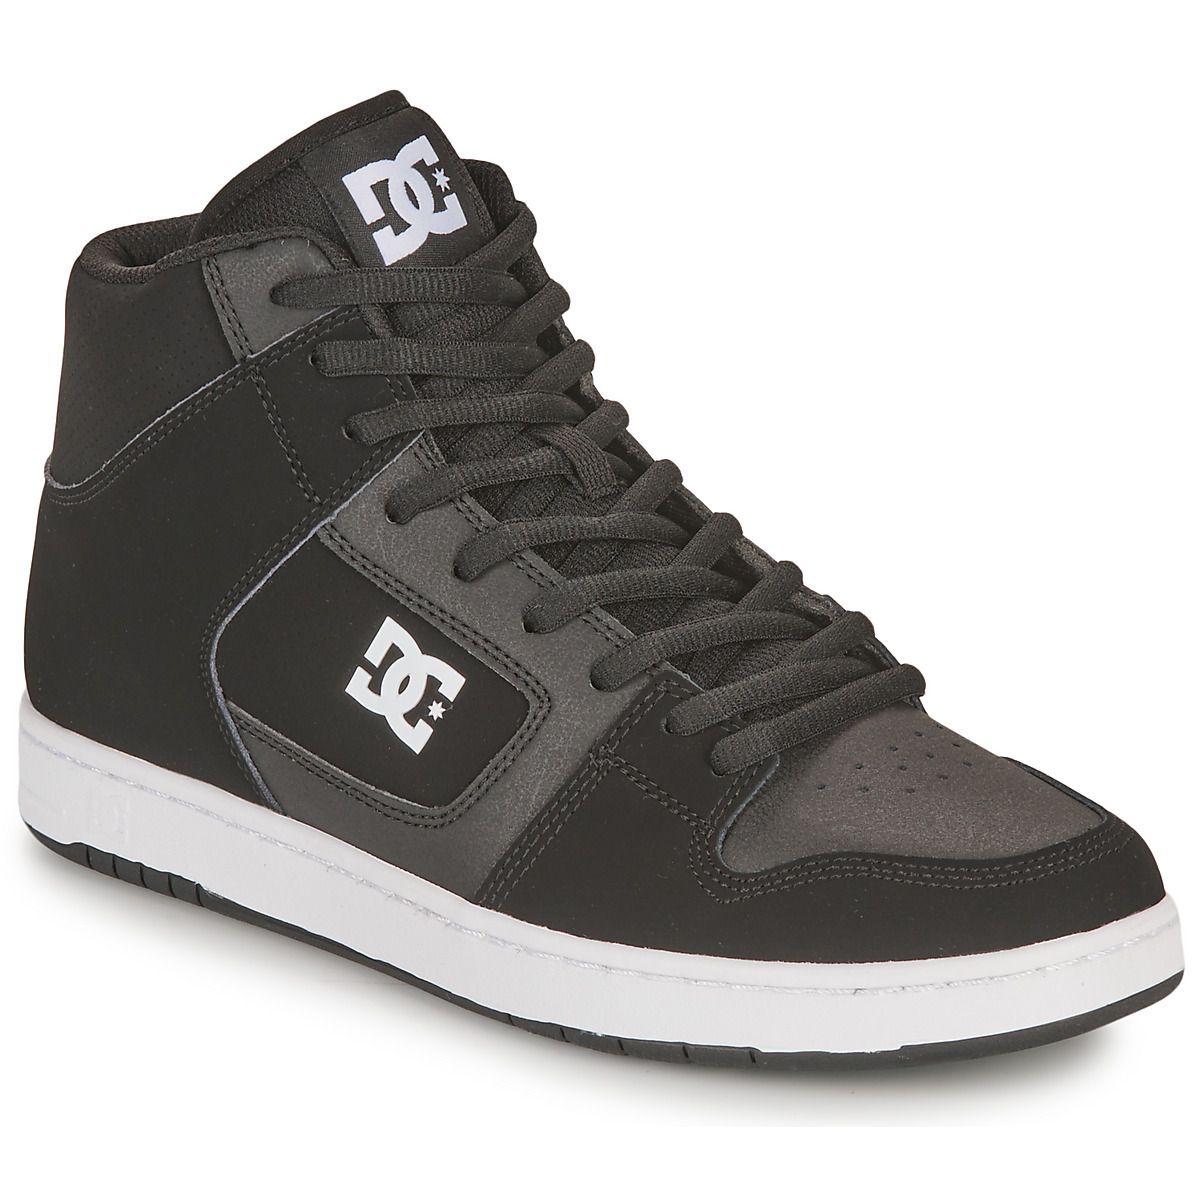 Sneakers Black - Dc Shoes Men - Spartoo GOOFASH